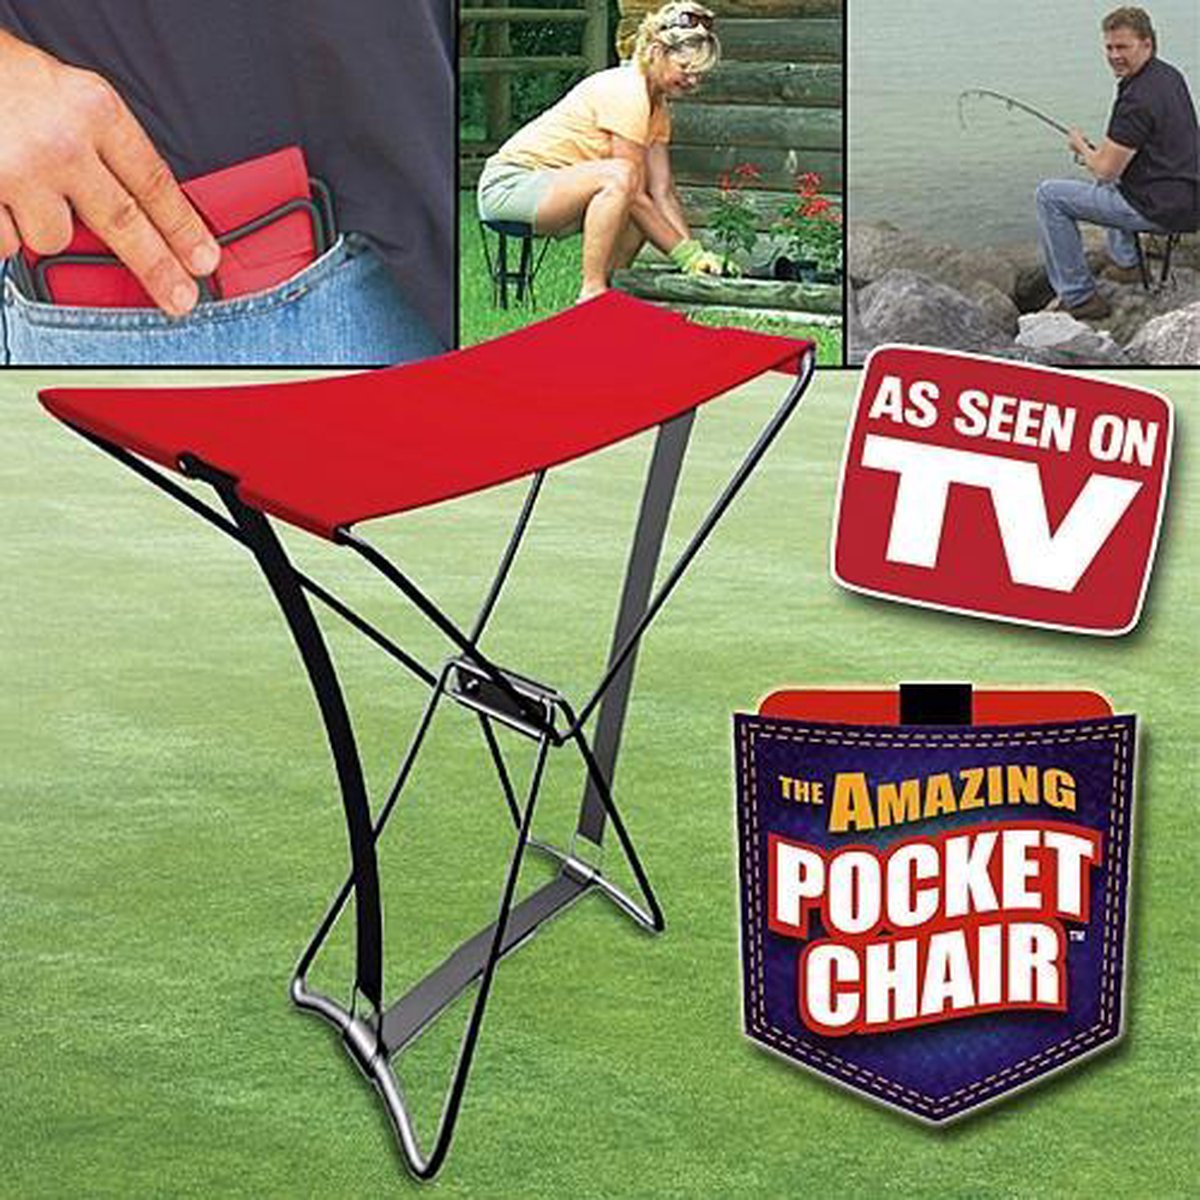 The amazing POCKET CHAIR. Compact opvouwbaar stevig stoeltje voor buitengebruik. Op reis, camping, festival, sportwedstrijd, etc.